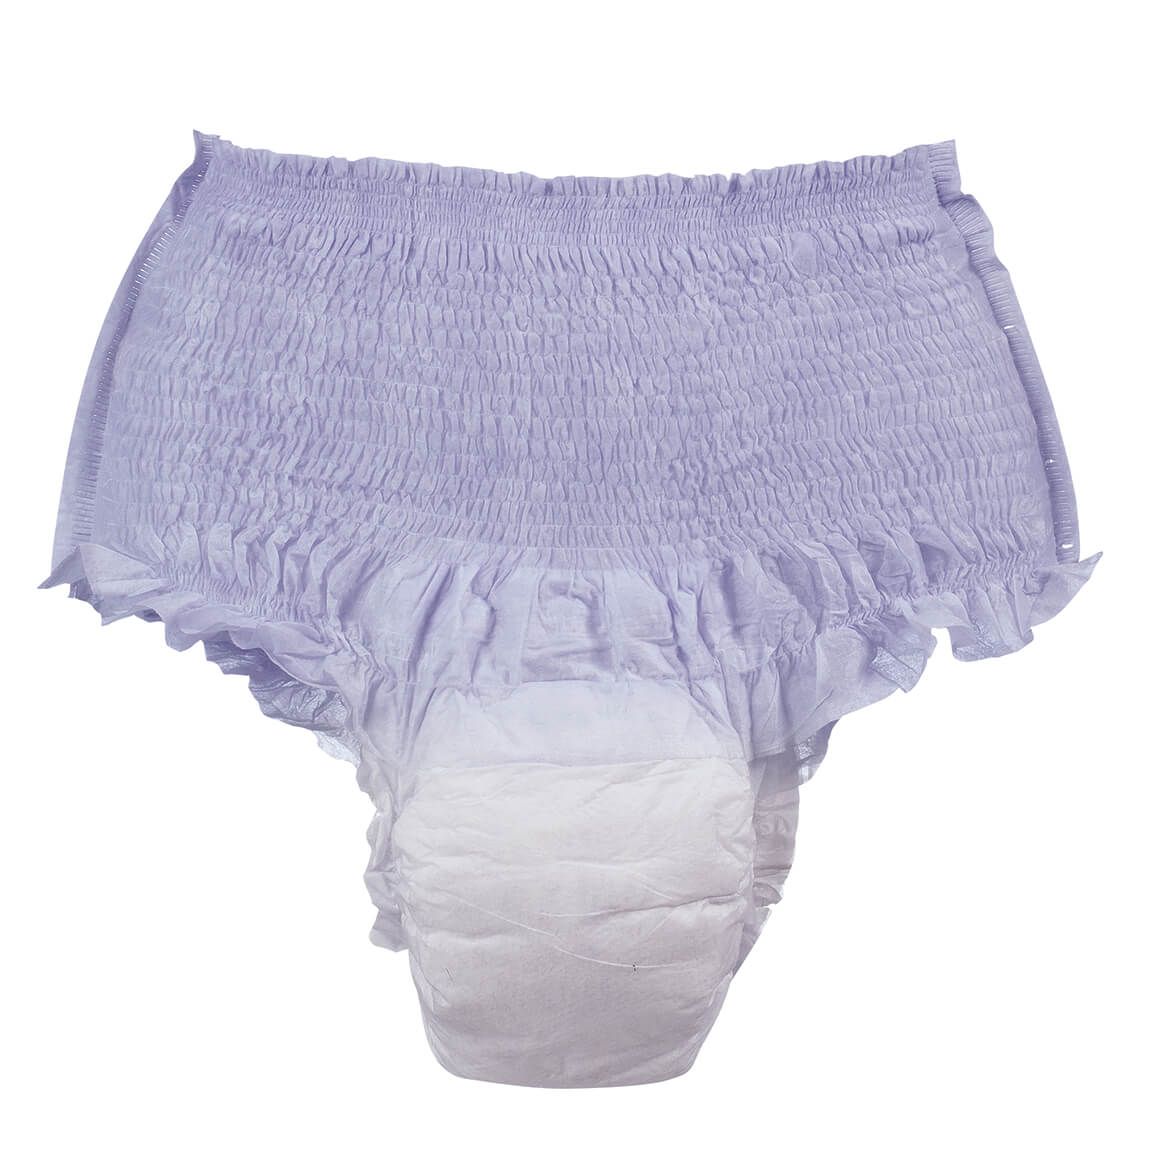 Female Protective Underwear, Case + '-' + 355859